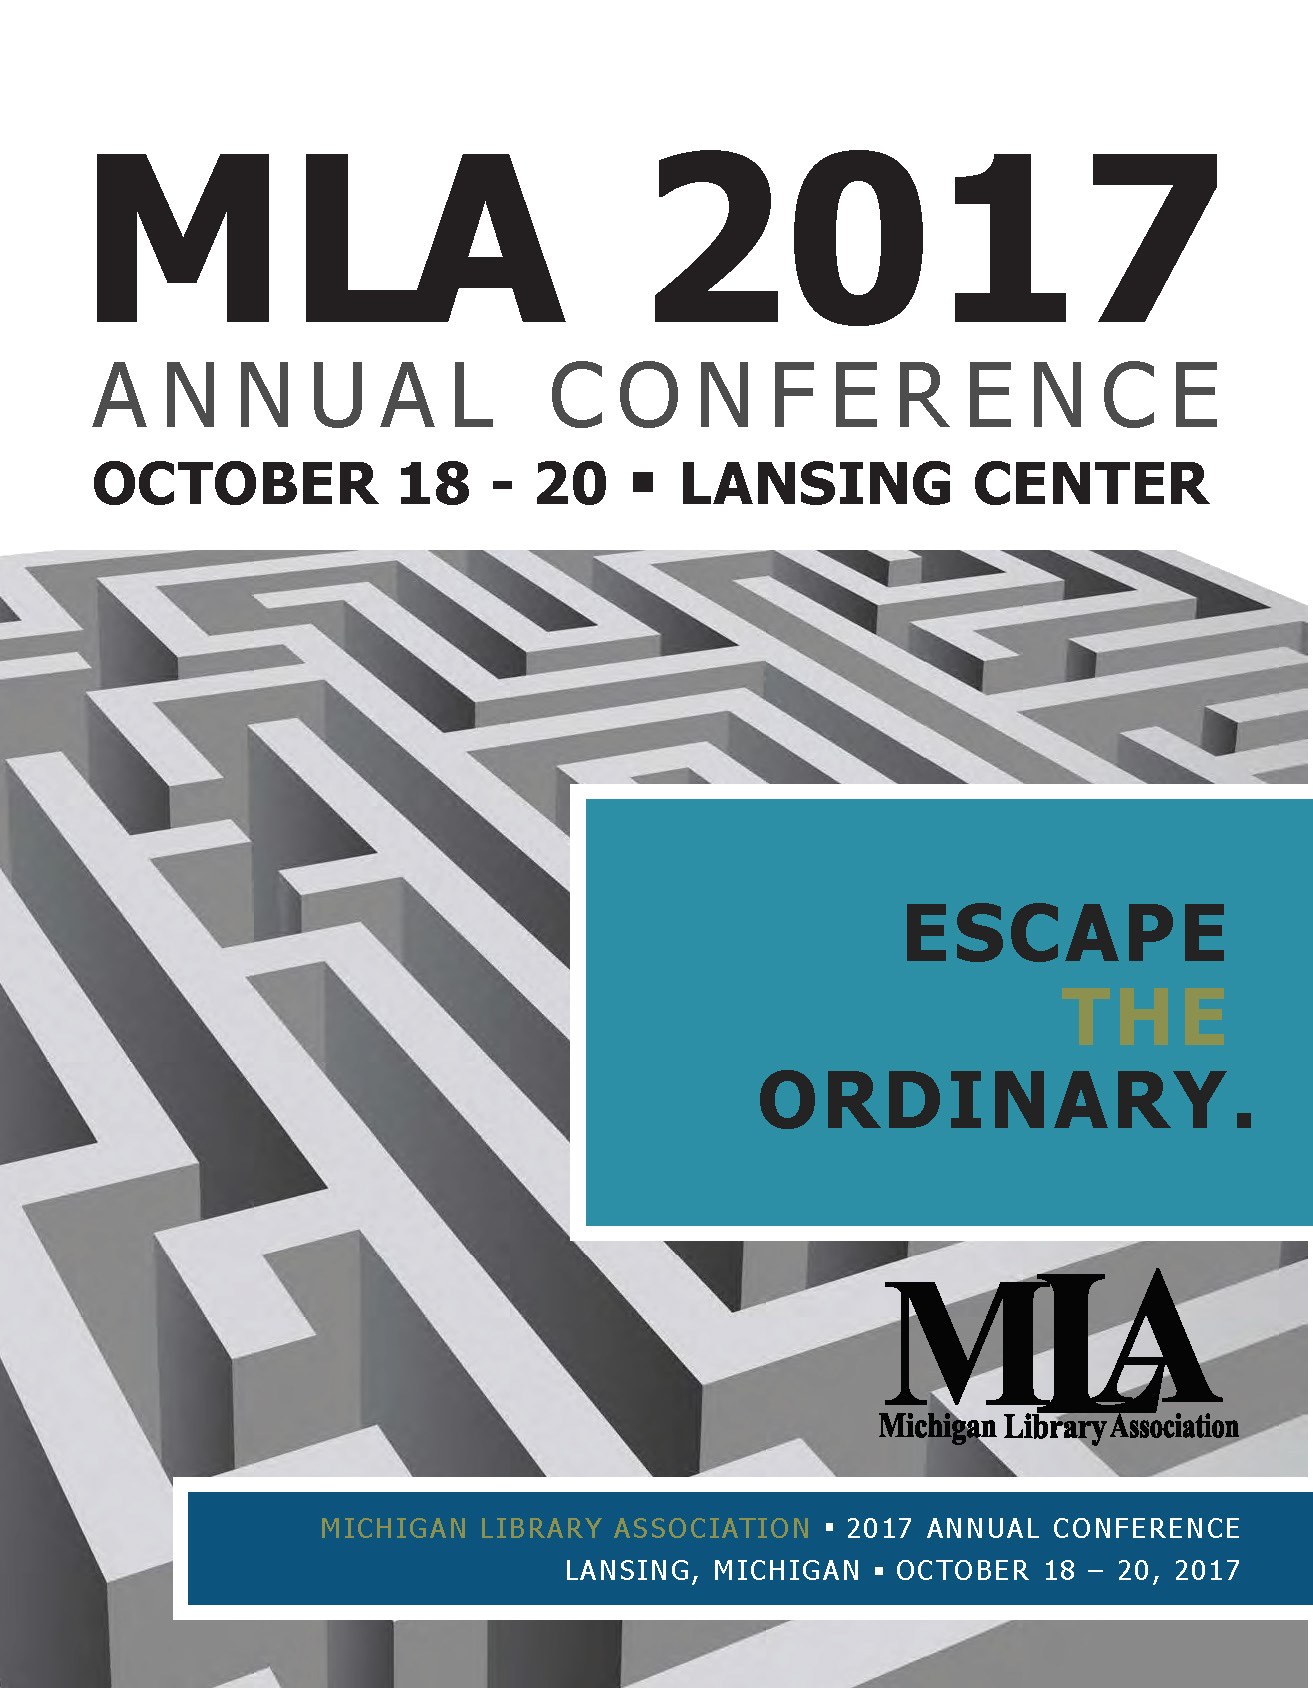 MLA 2017 Program Book Cover image - linked to program book pdf